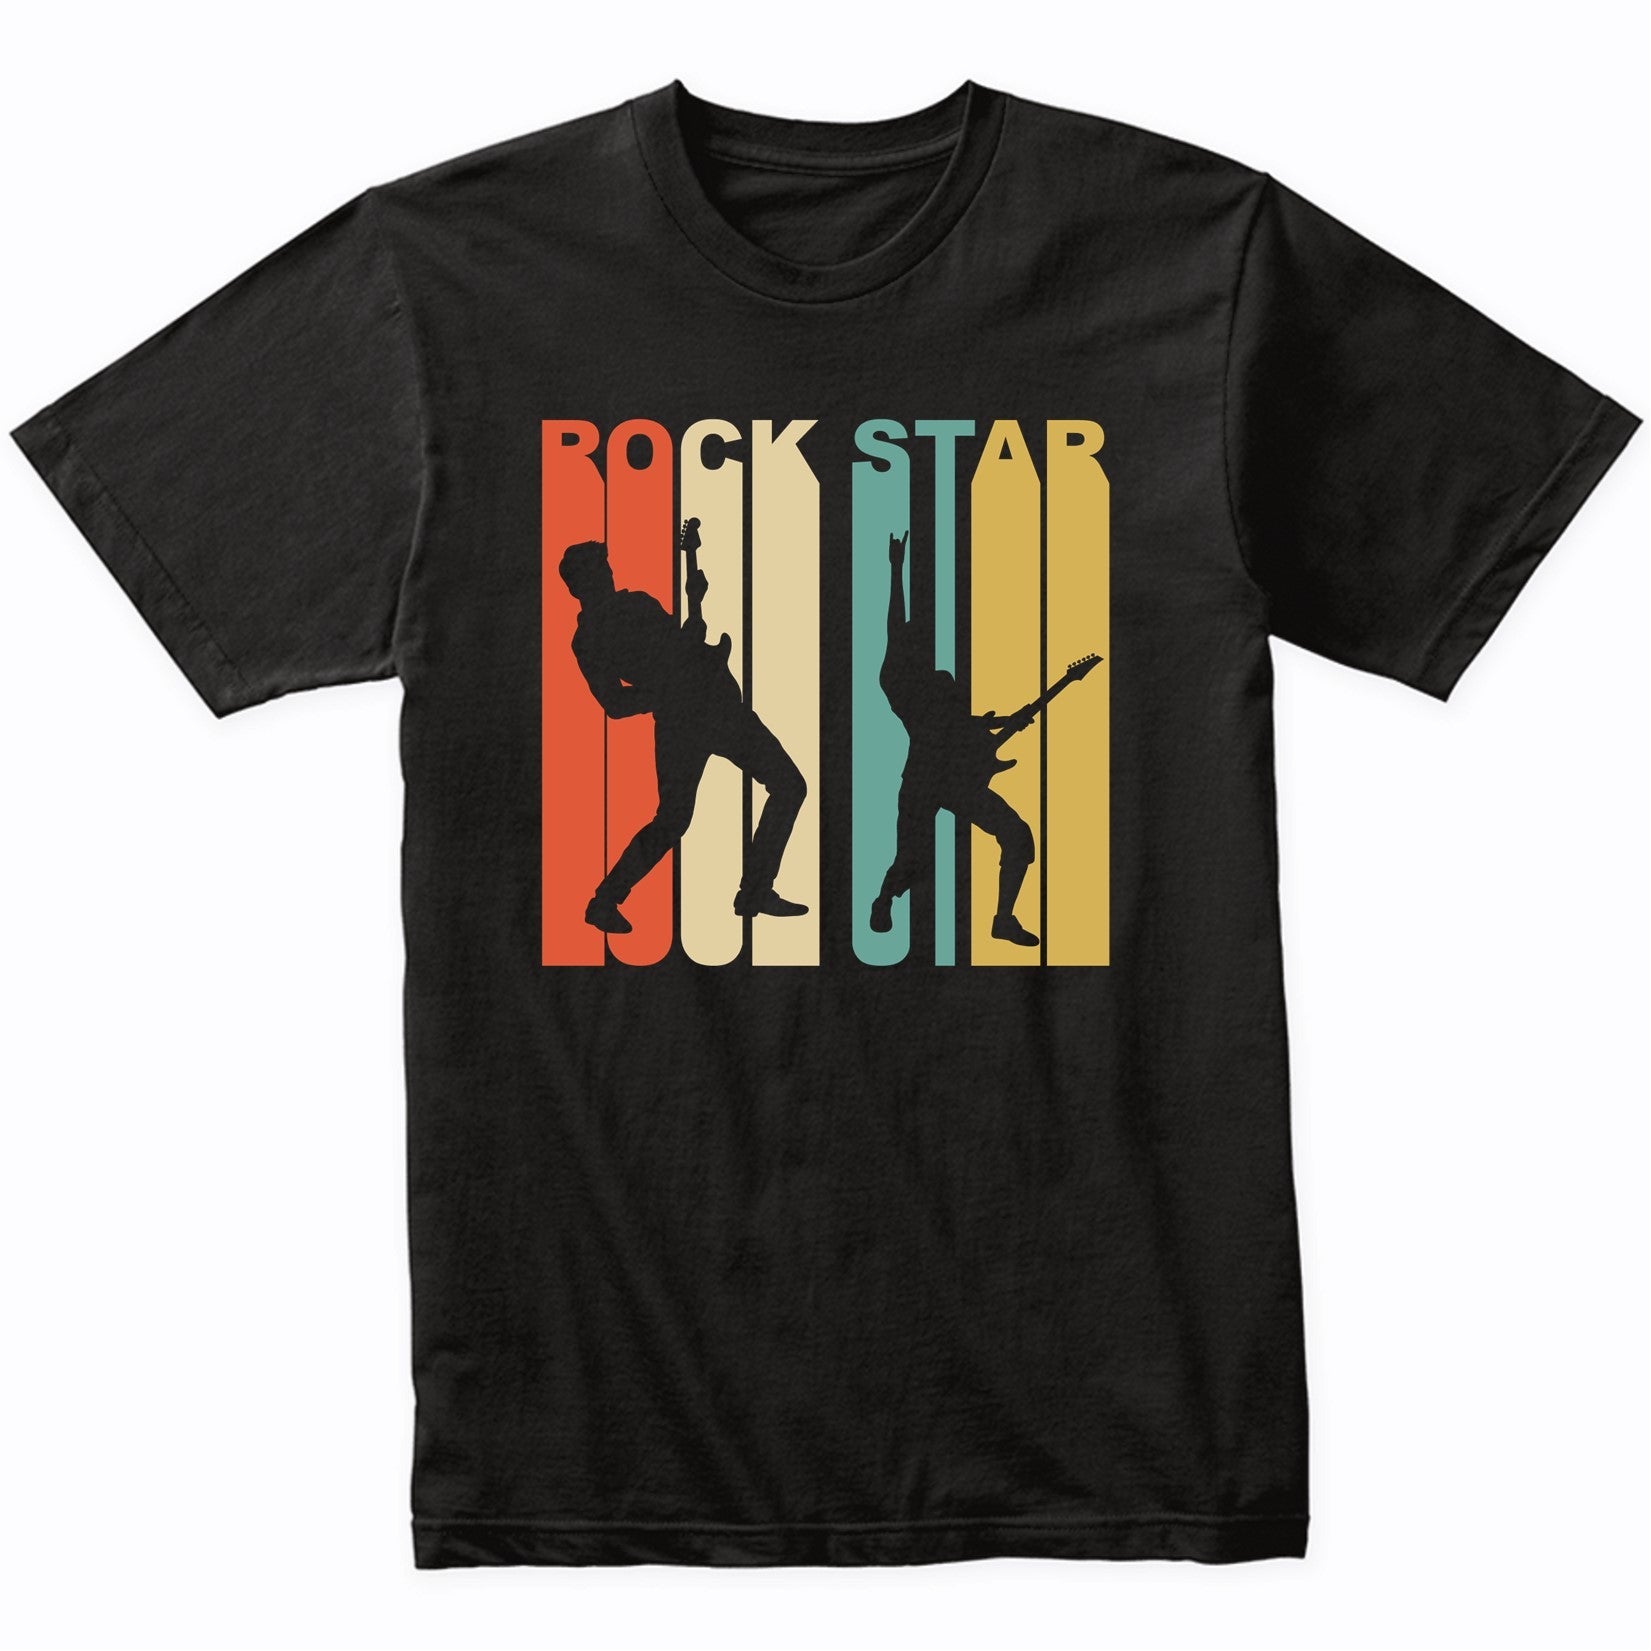 Retro 1970's Style Rock Star Silhouette Music T-Shirt